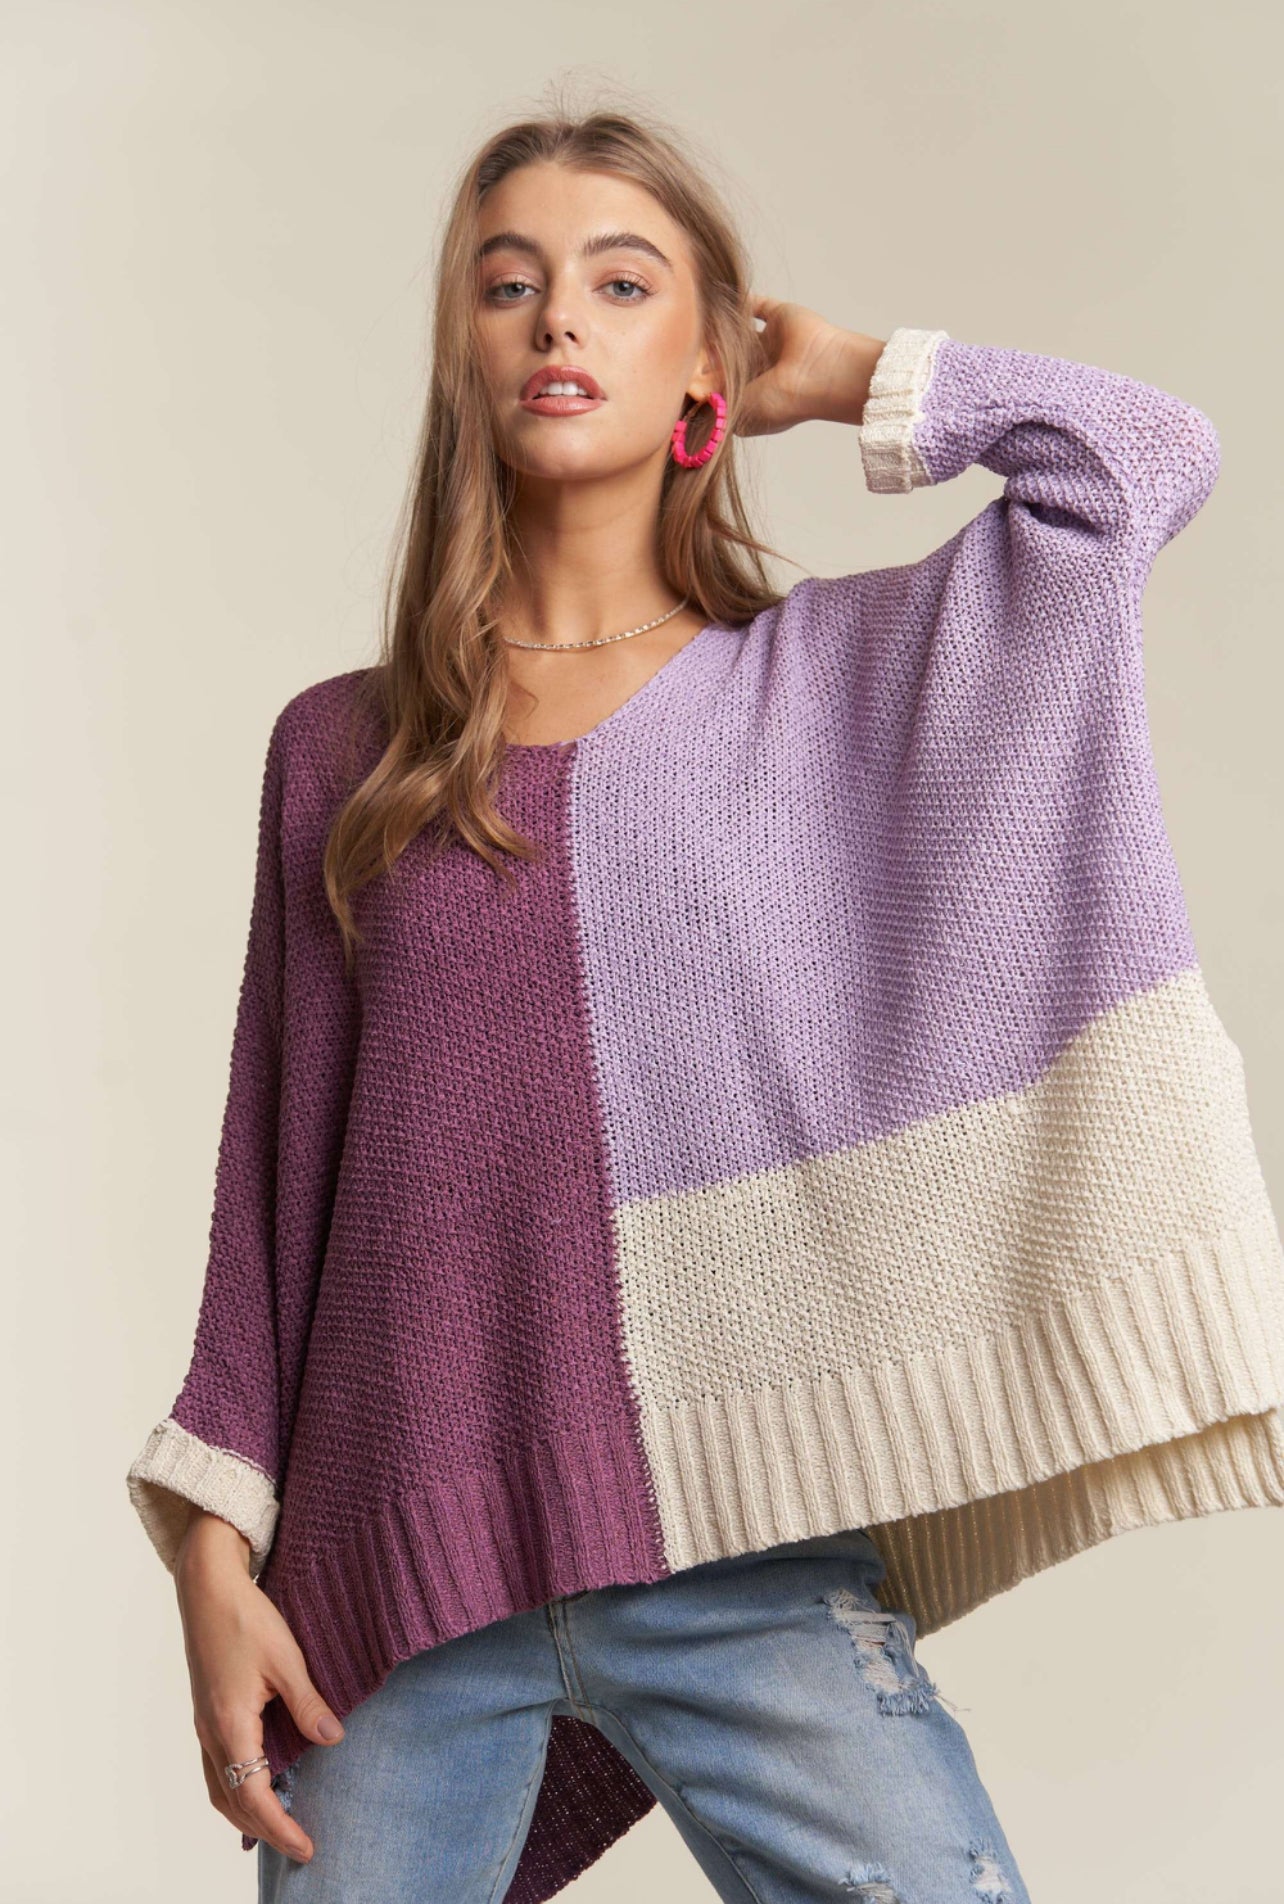 Lilac Secrets Sweater